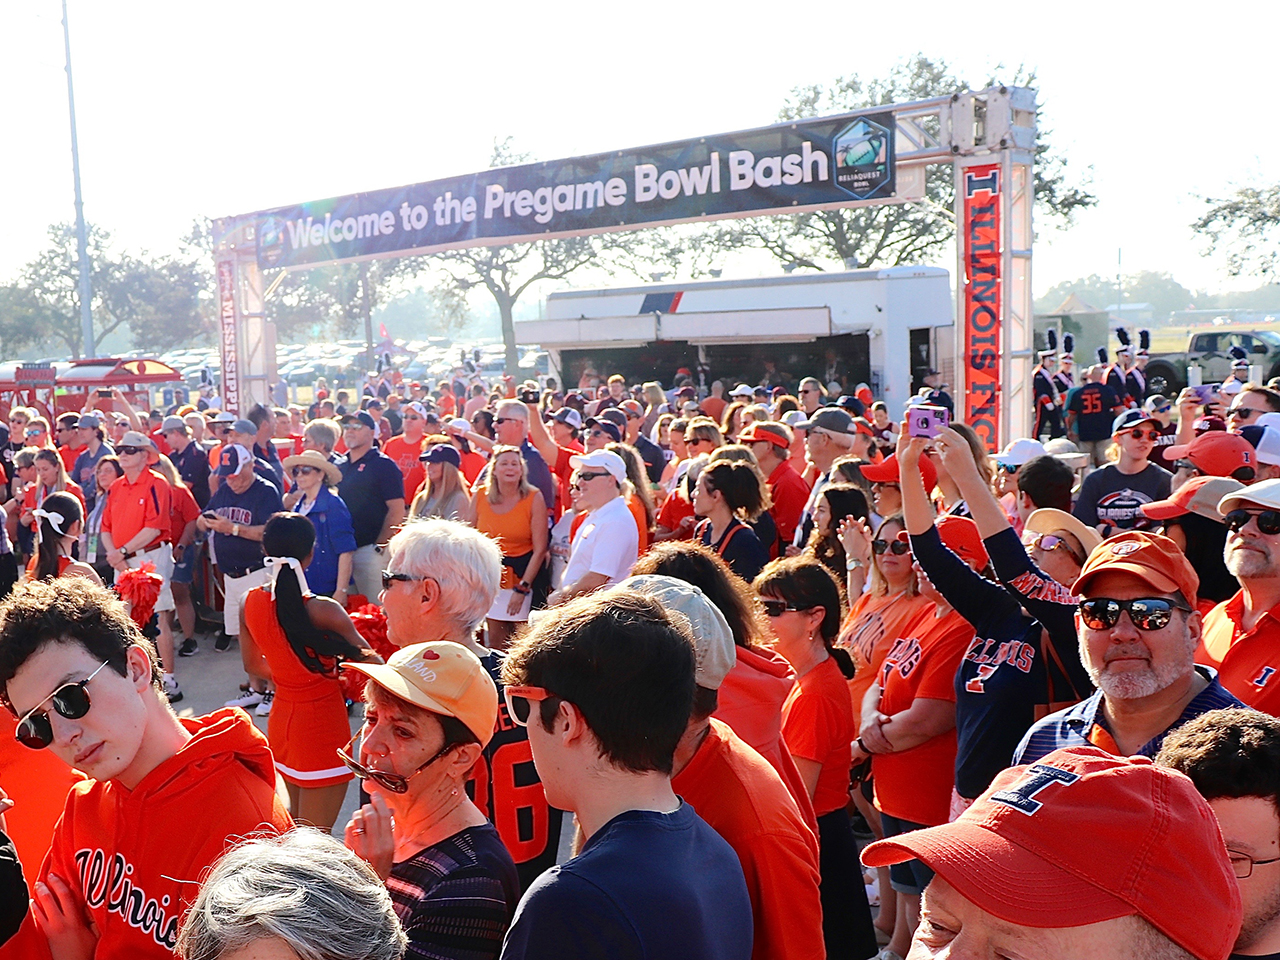 Fans Enjoy the Pregame Bowl Bash outside the stadium